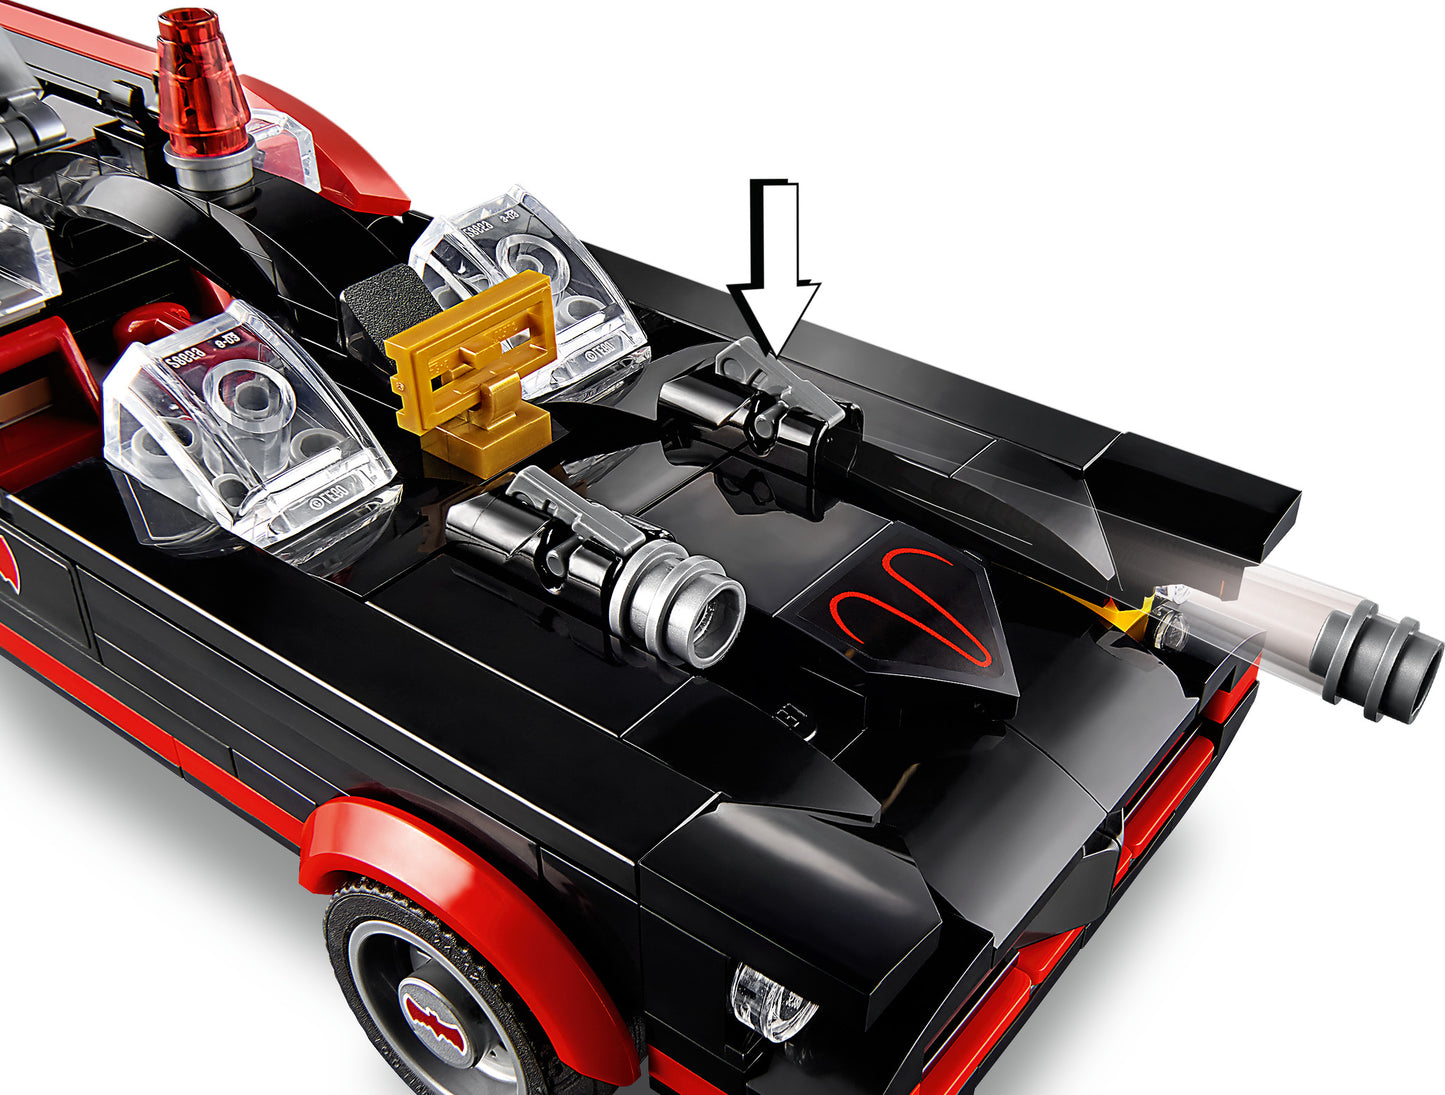 76188 LEGO DC Super Heroes - Classica Batmobile di Batman della Serie TV